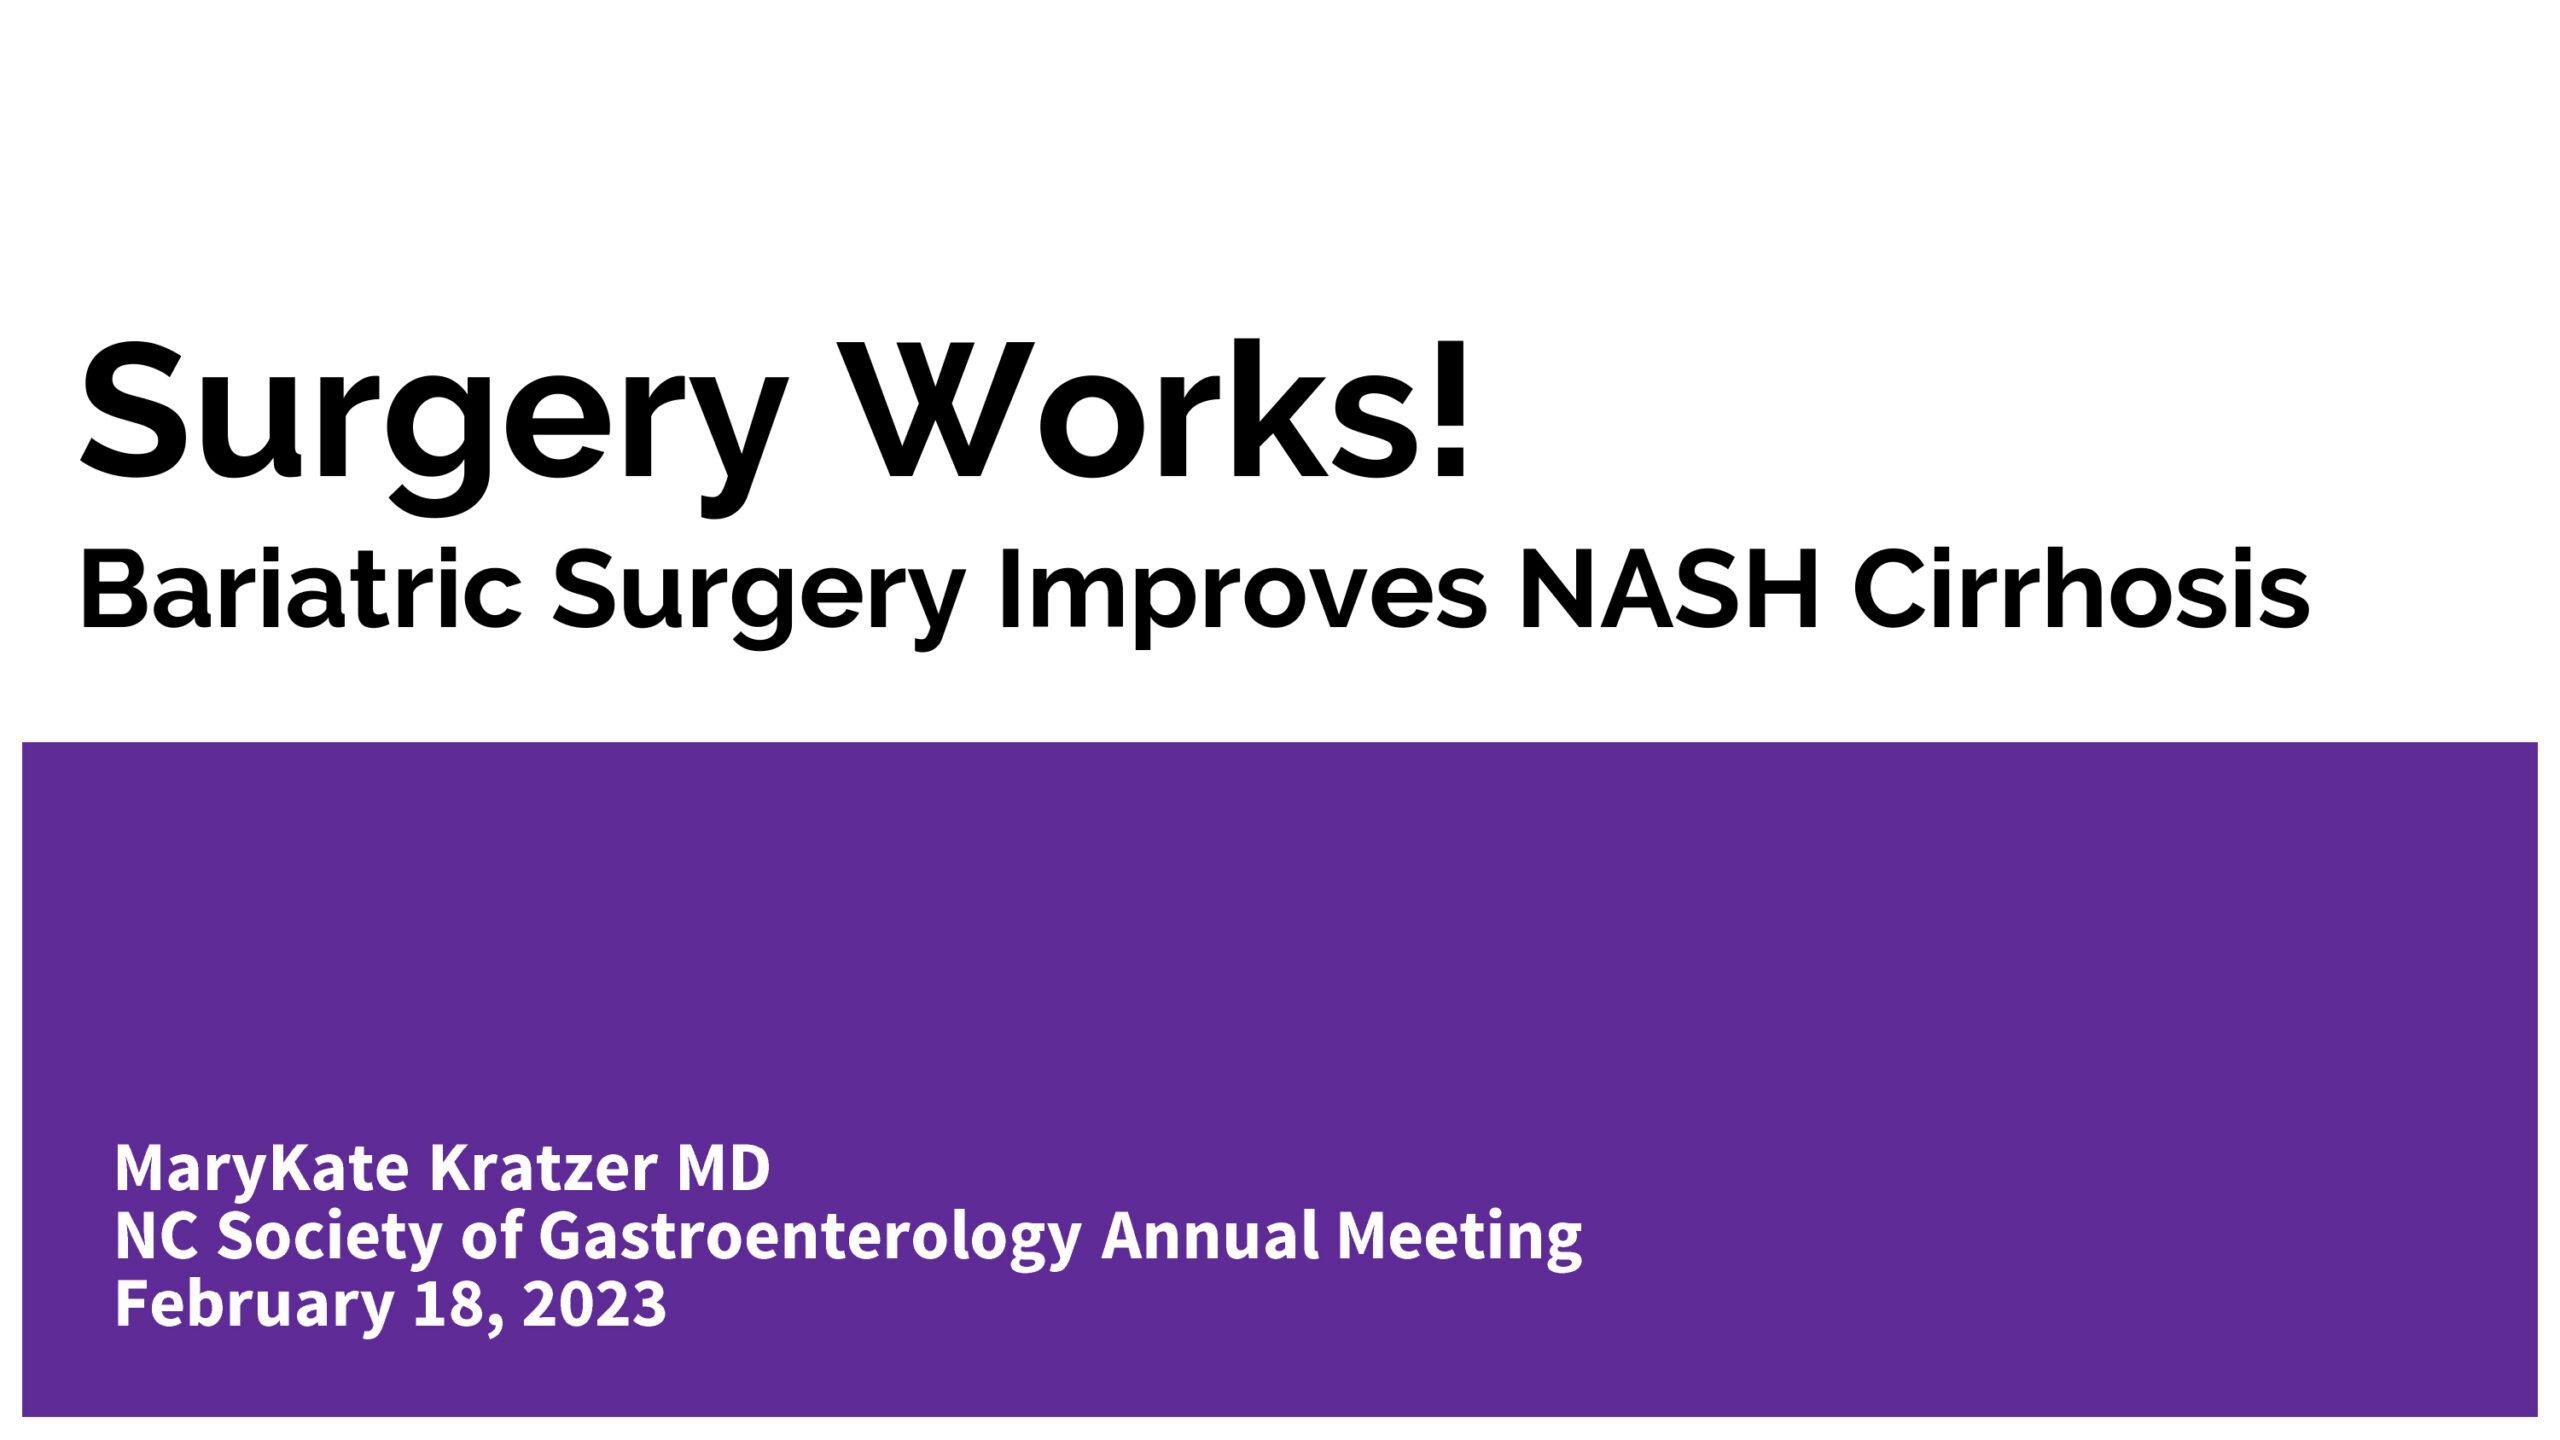 Surgery Works! Bariatric Surgery Improves NASH Cirrhosis